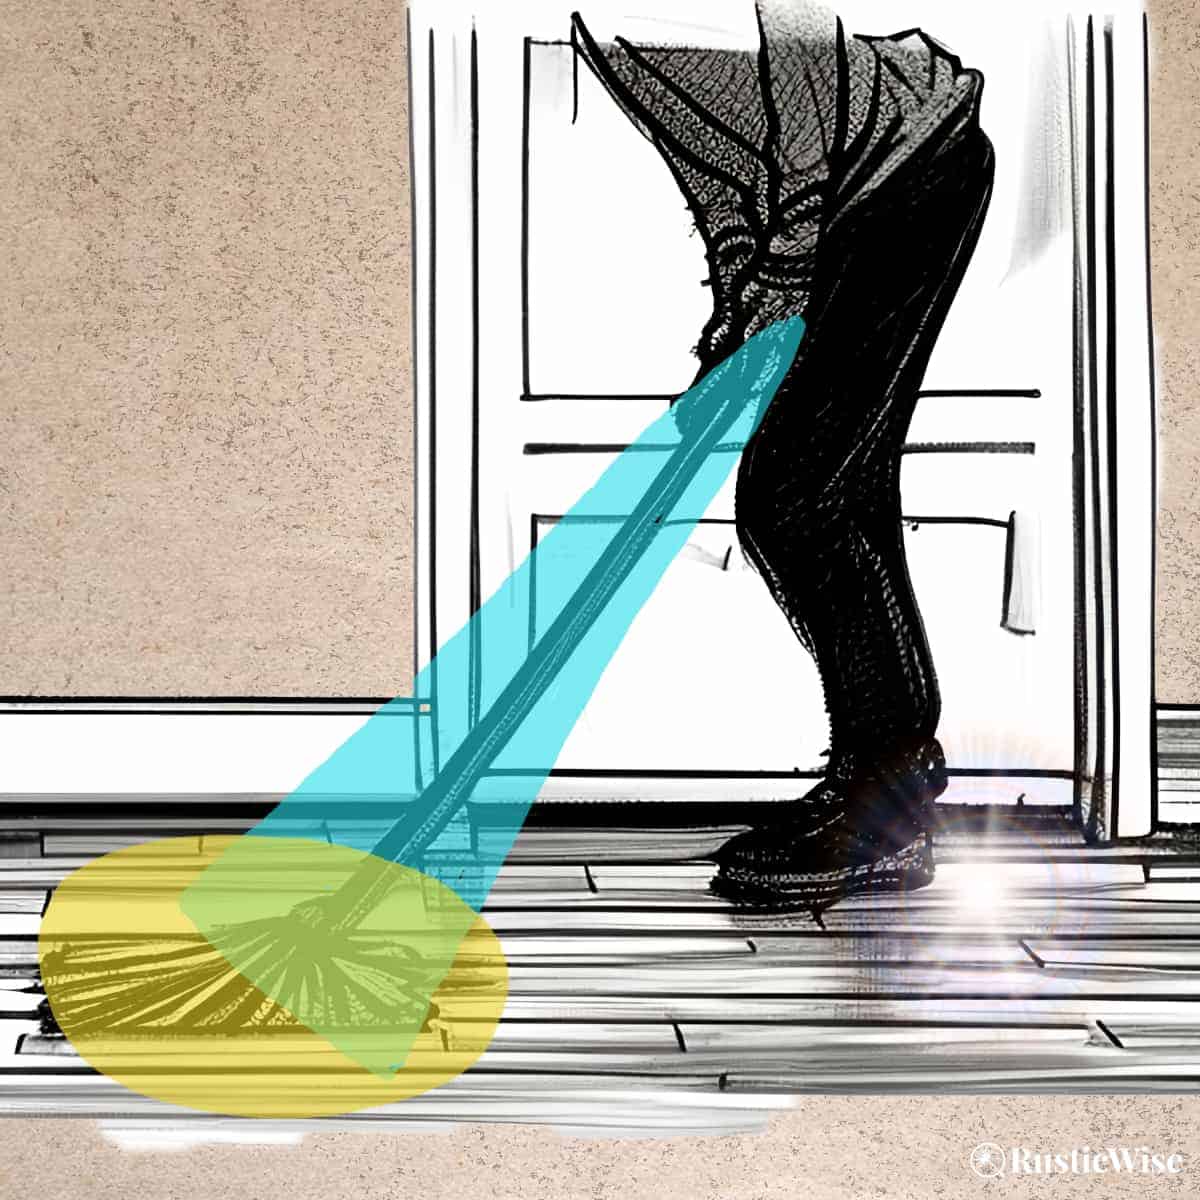 RusticWise, best way to clean lvp flooring, illustration